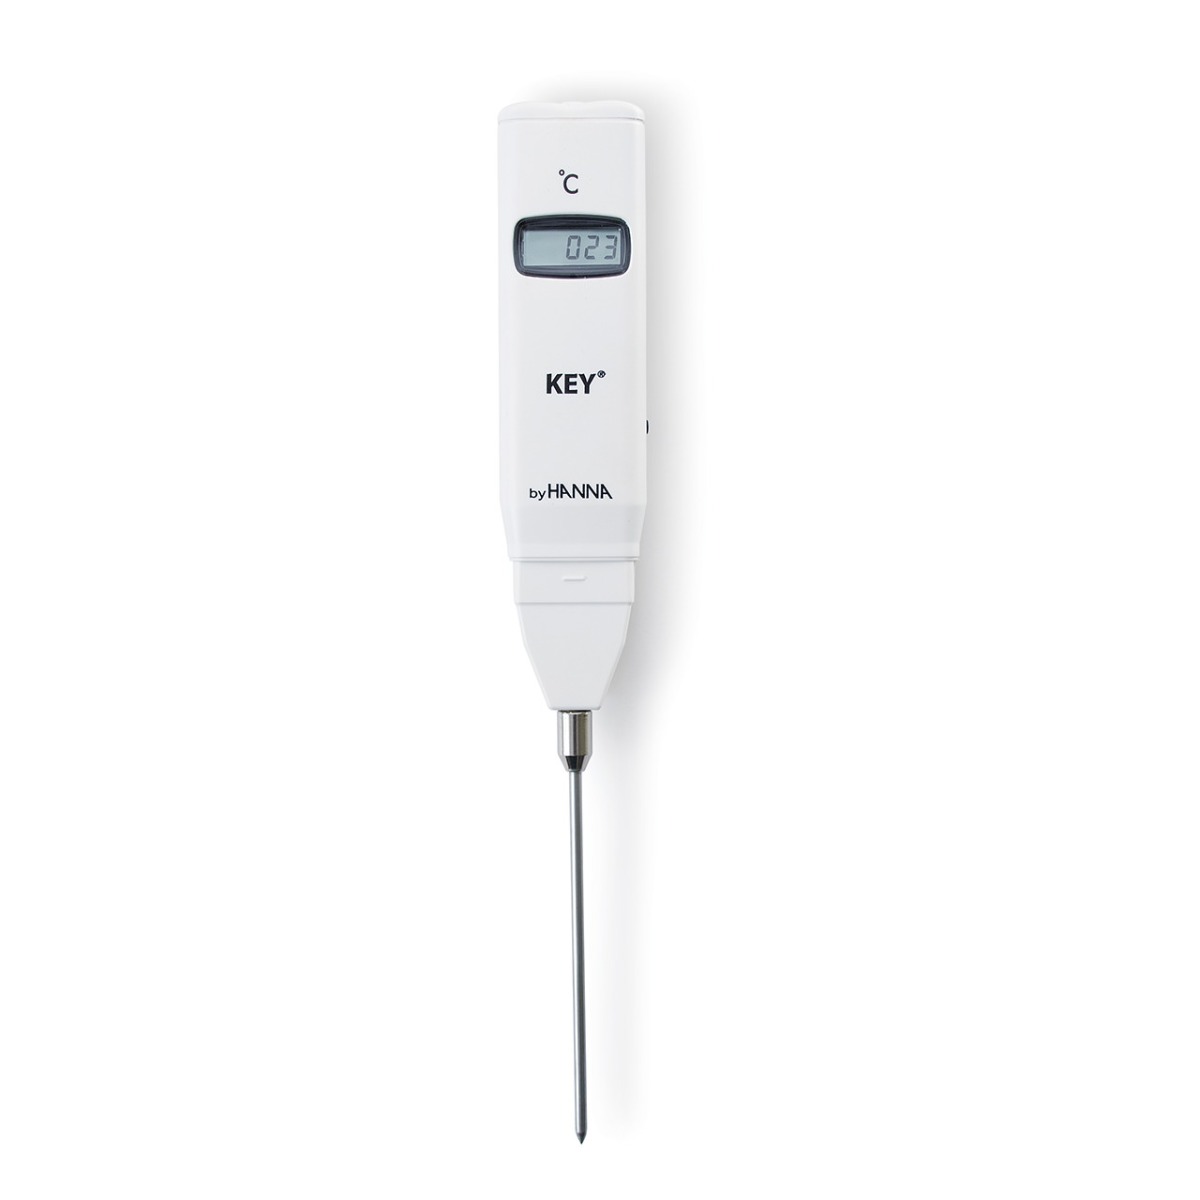 KEY® Pocket Thermometer - HI98517